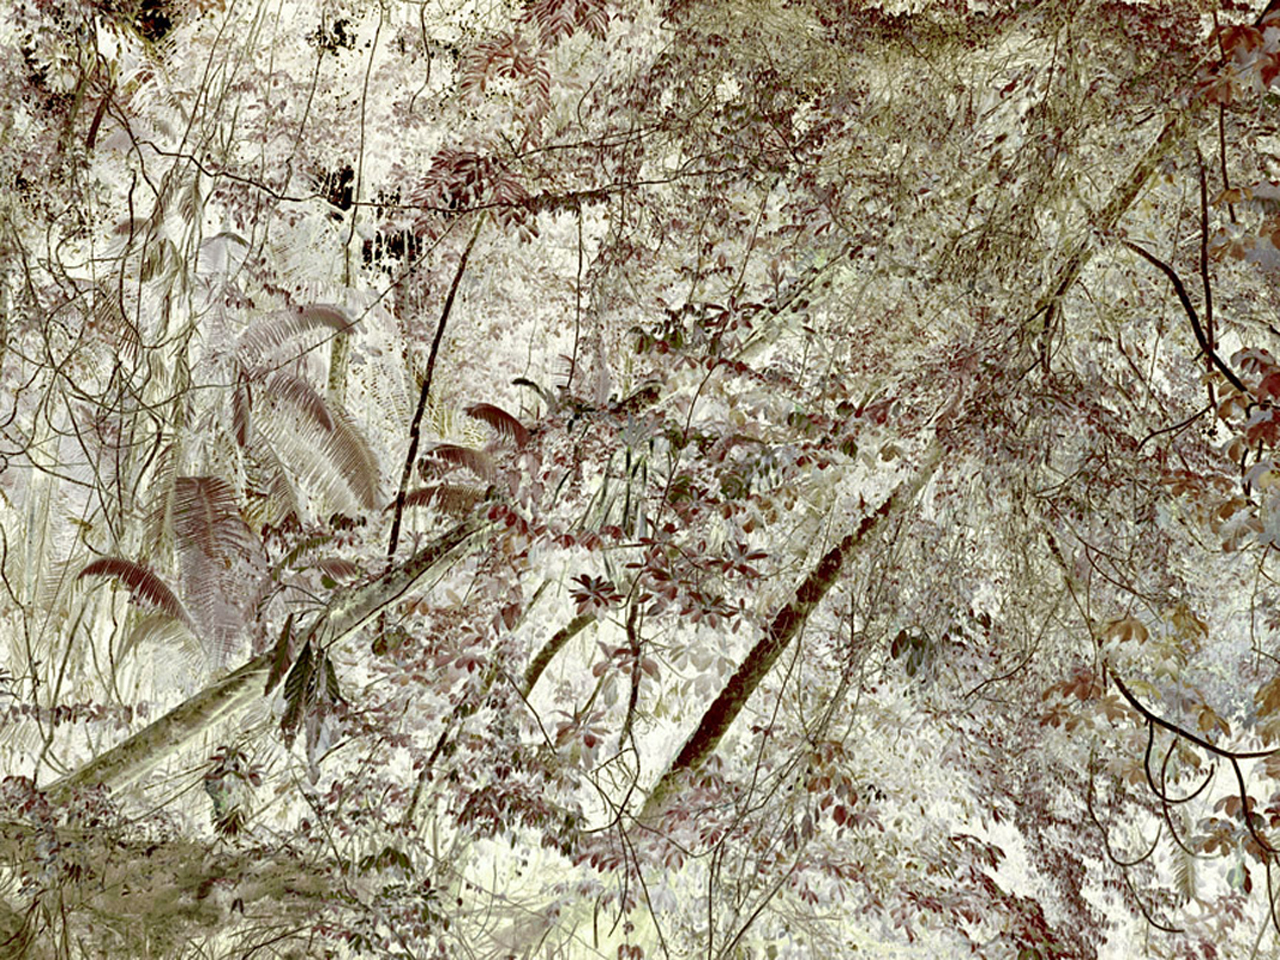   Leaning Trees,  Tiputini River,&nbsp;Ecuador, 2009   Archival ink jet print on Masa paper    30” x 40”    